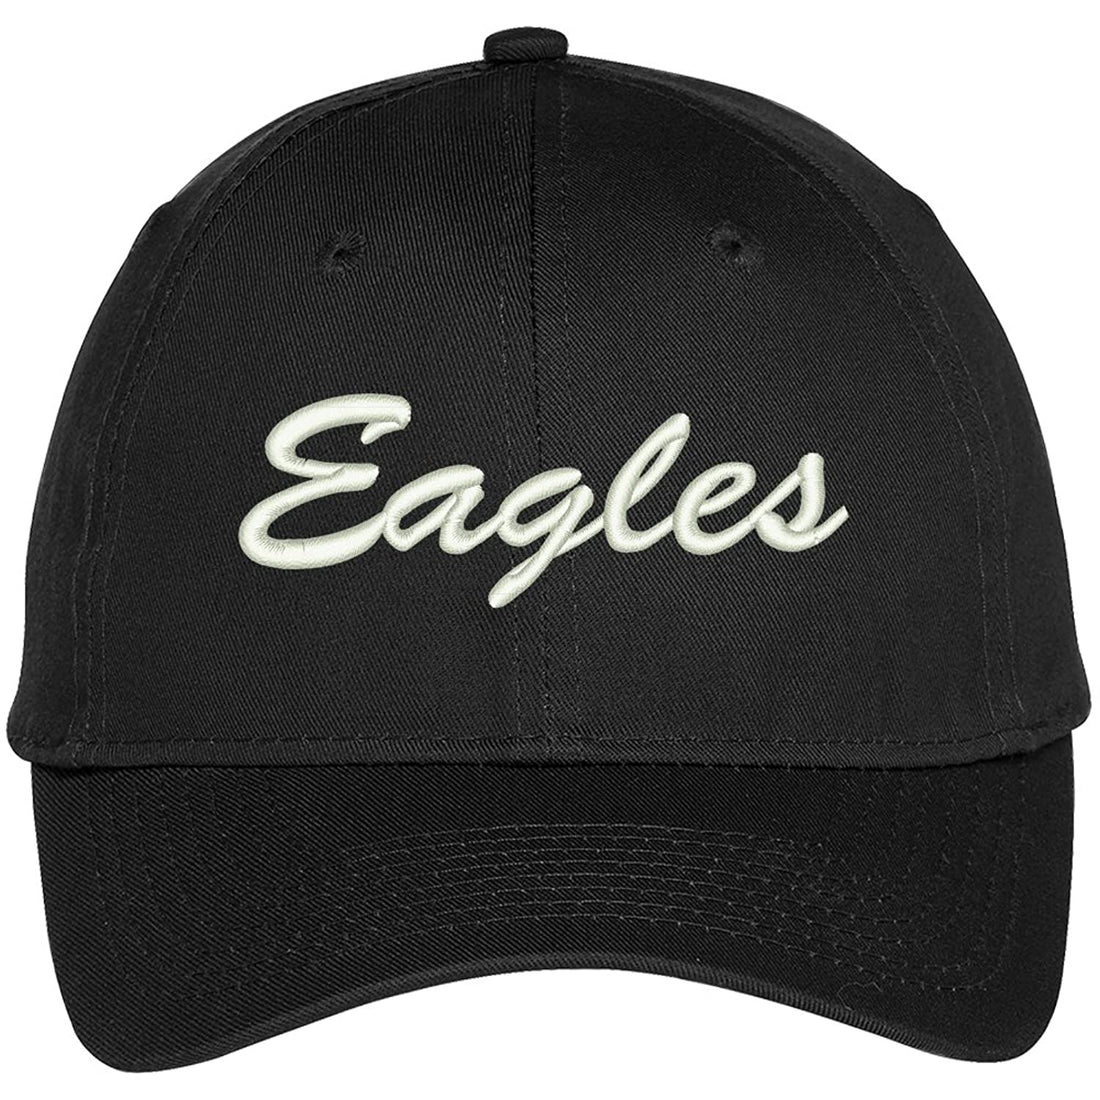 Trendy Apparel Shop Eagles Embroidered Precurved Adjustable Cap - Navy